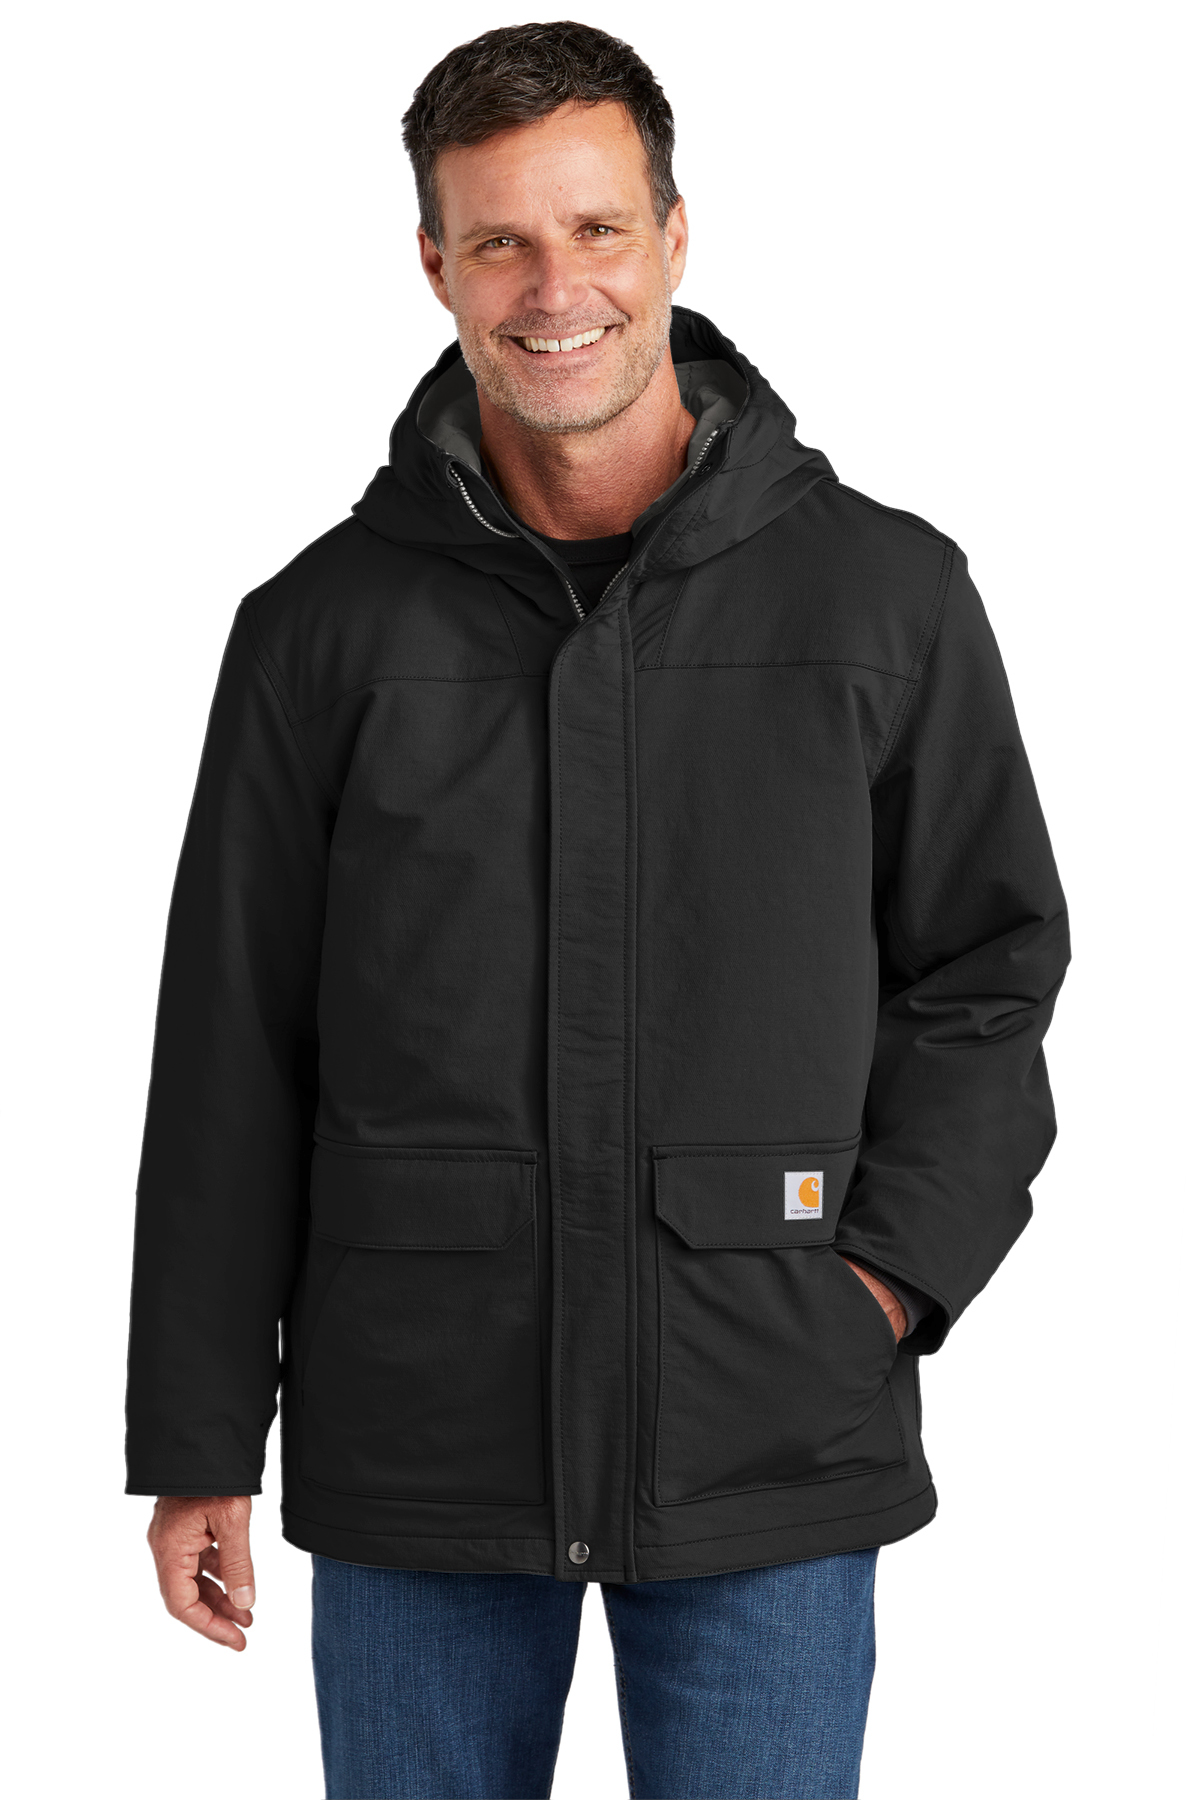 Carhartt CT105533 Men's Super Dux Insulated Hooded Coat